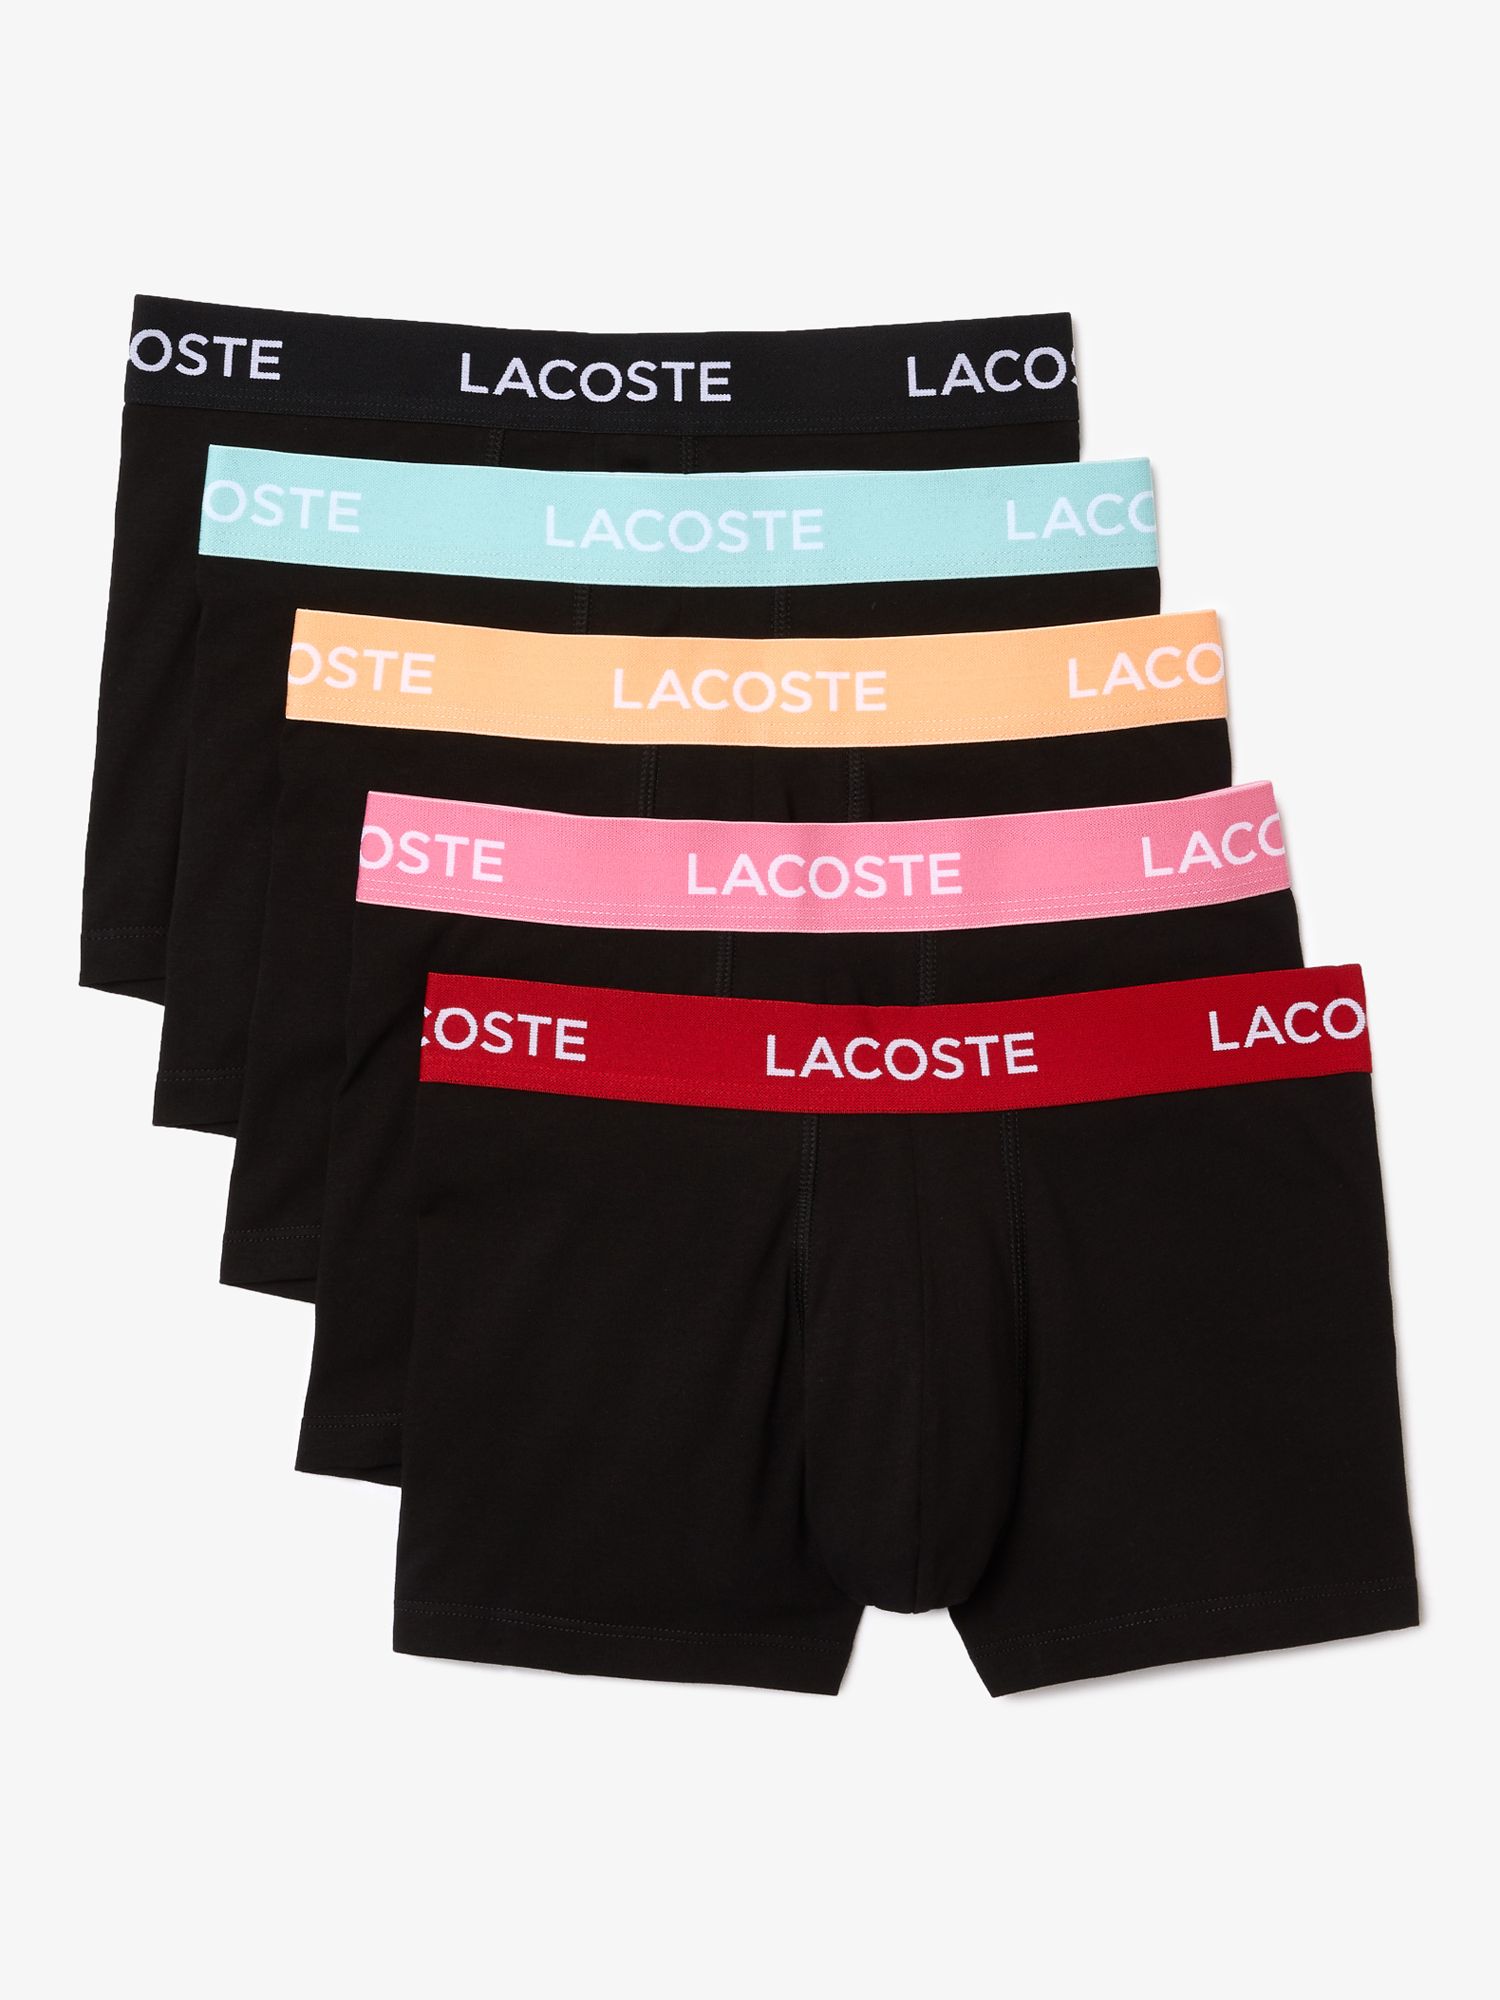 Men's Underwear at LASC